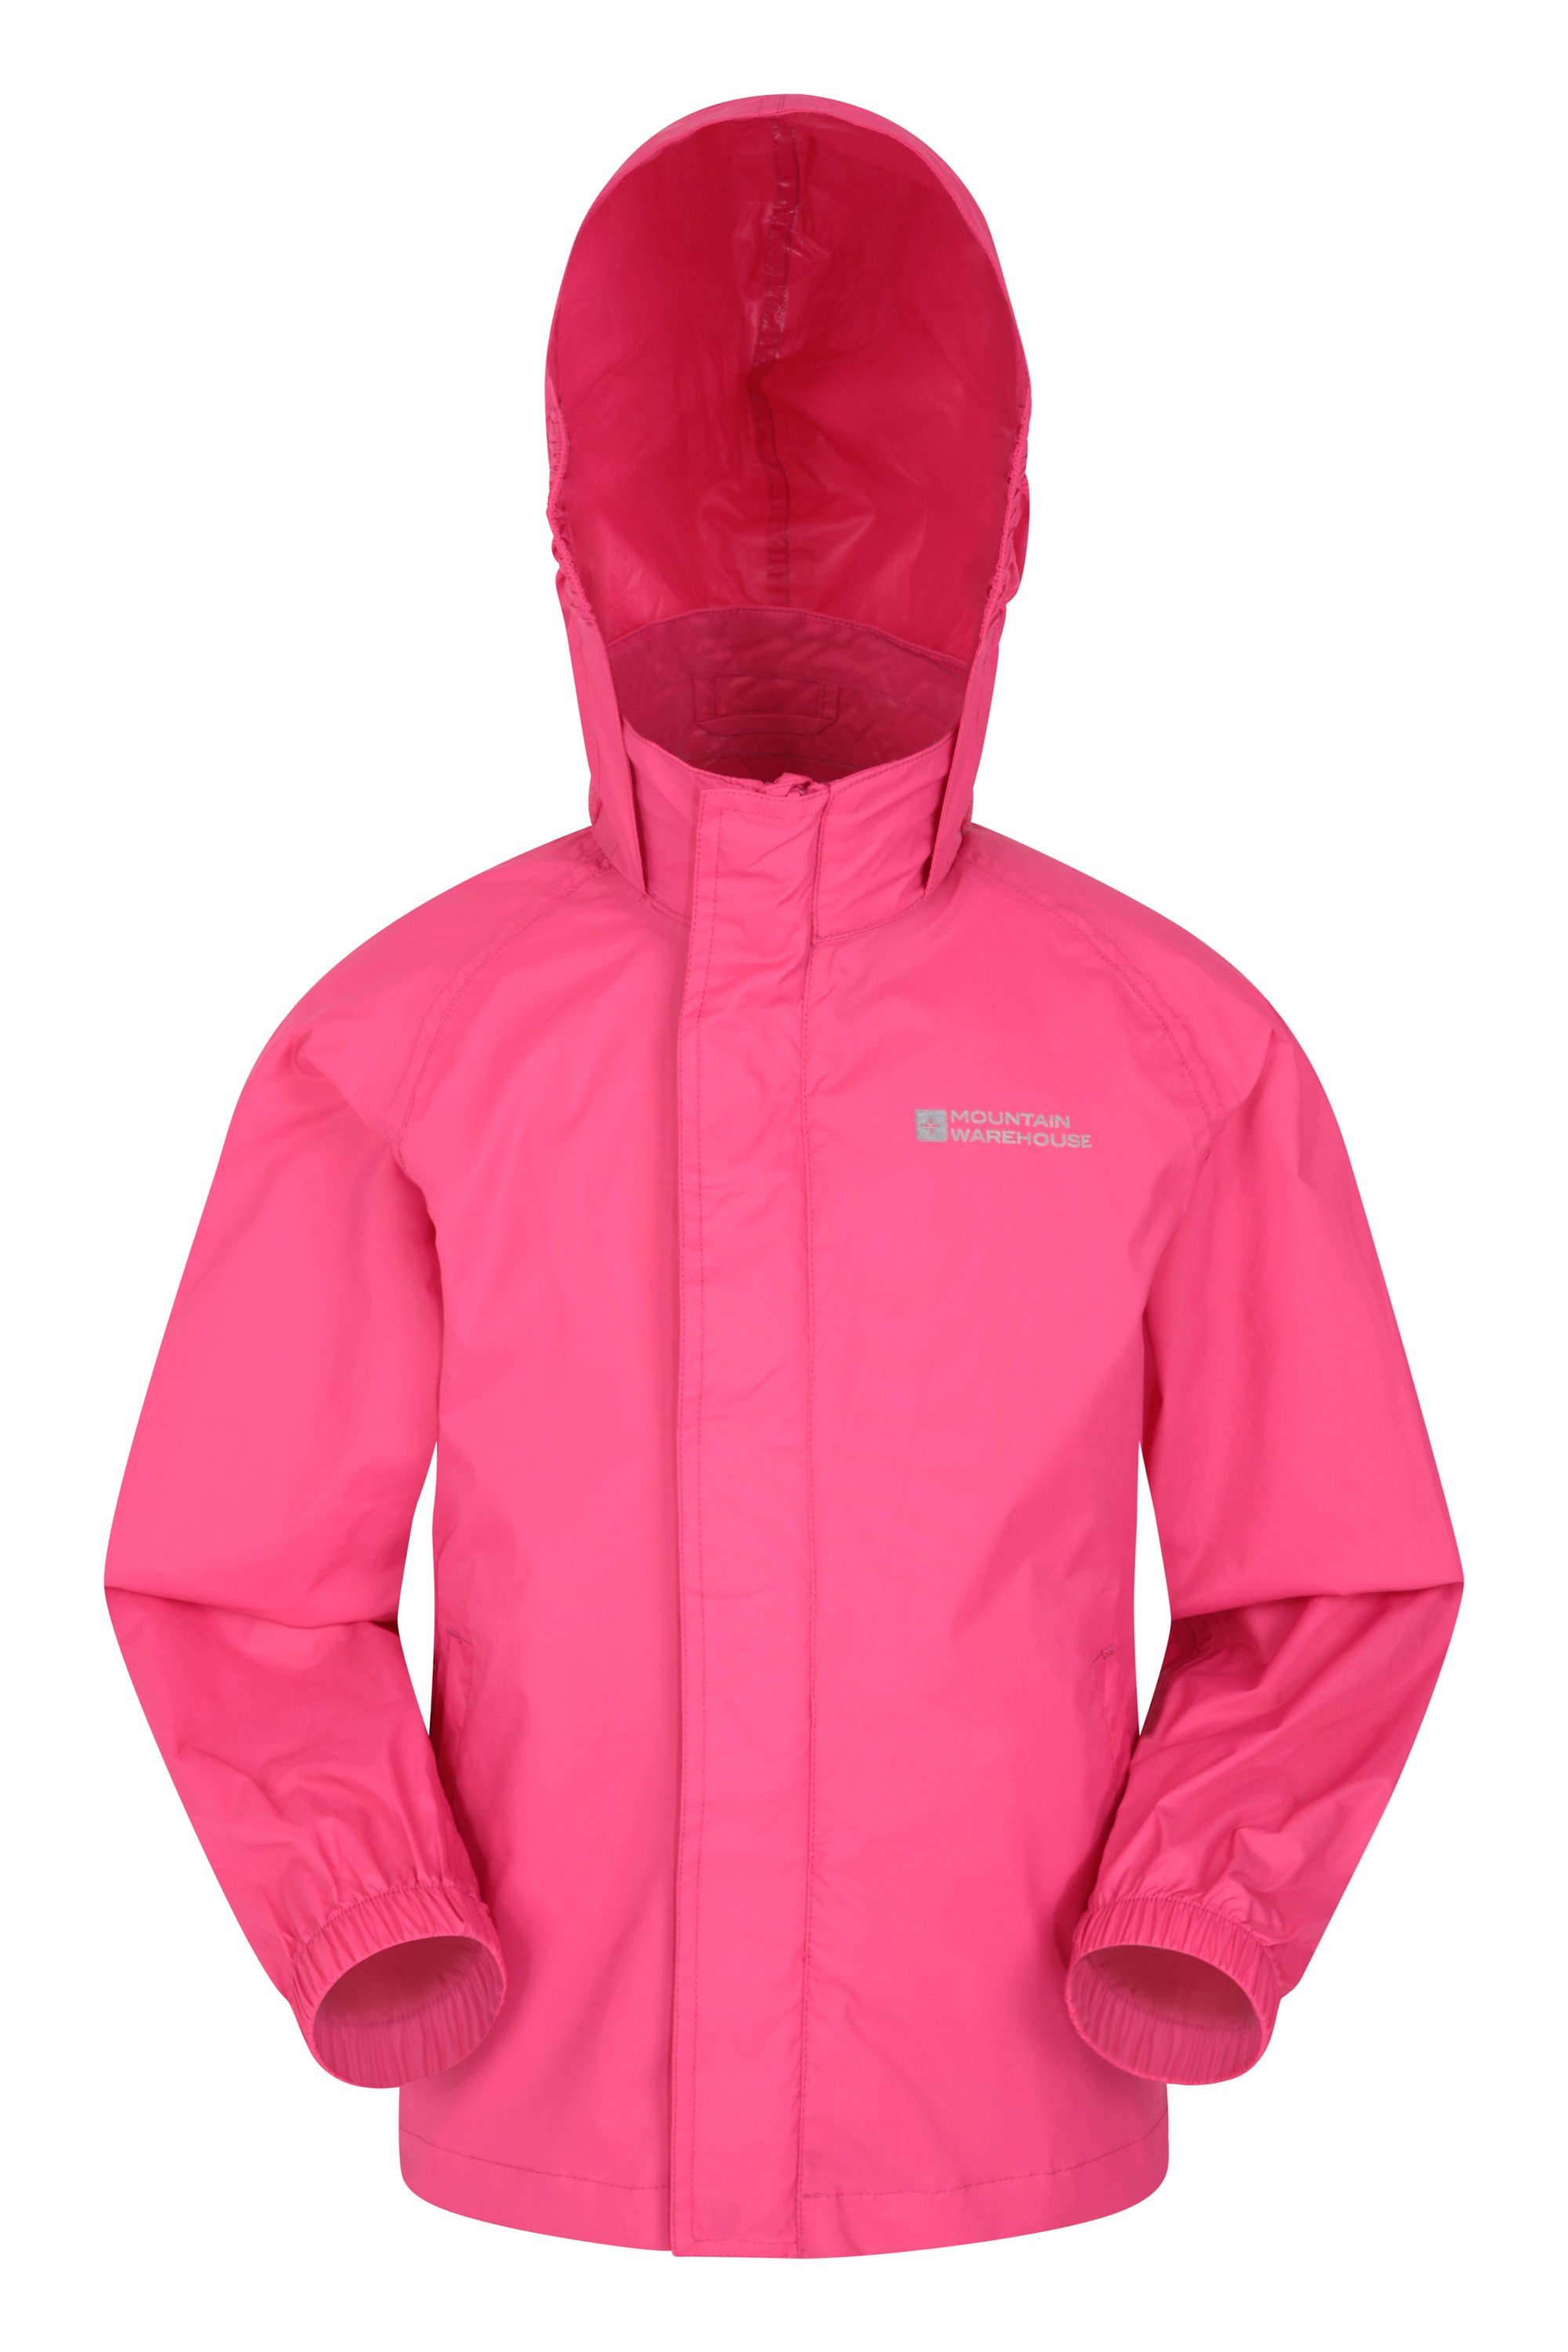 Breathable Mountain Warehouse Meteor Kids Waterproof Rain Jacket 